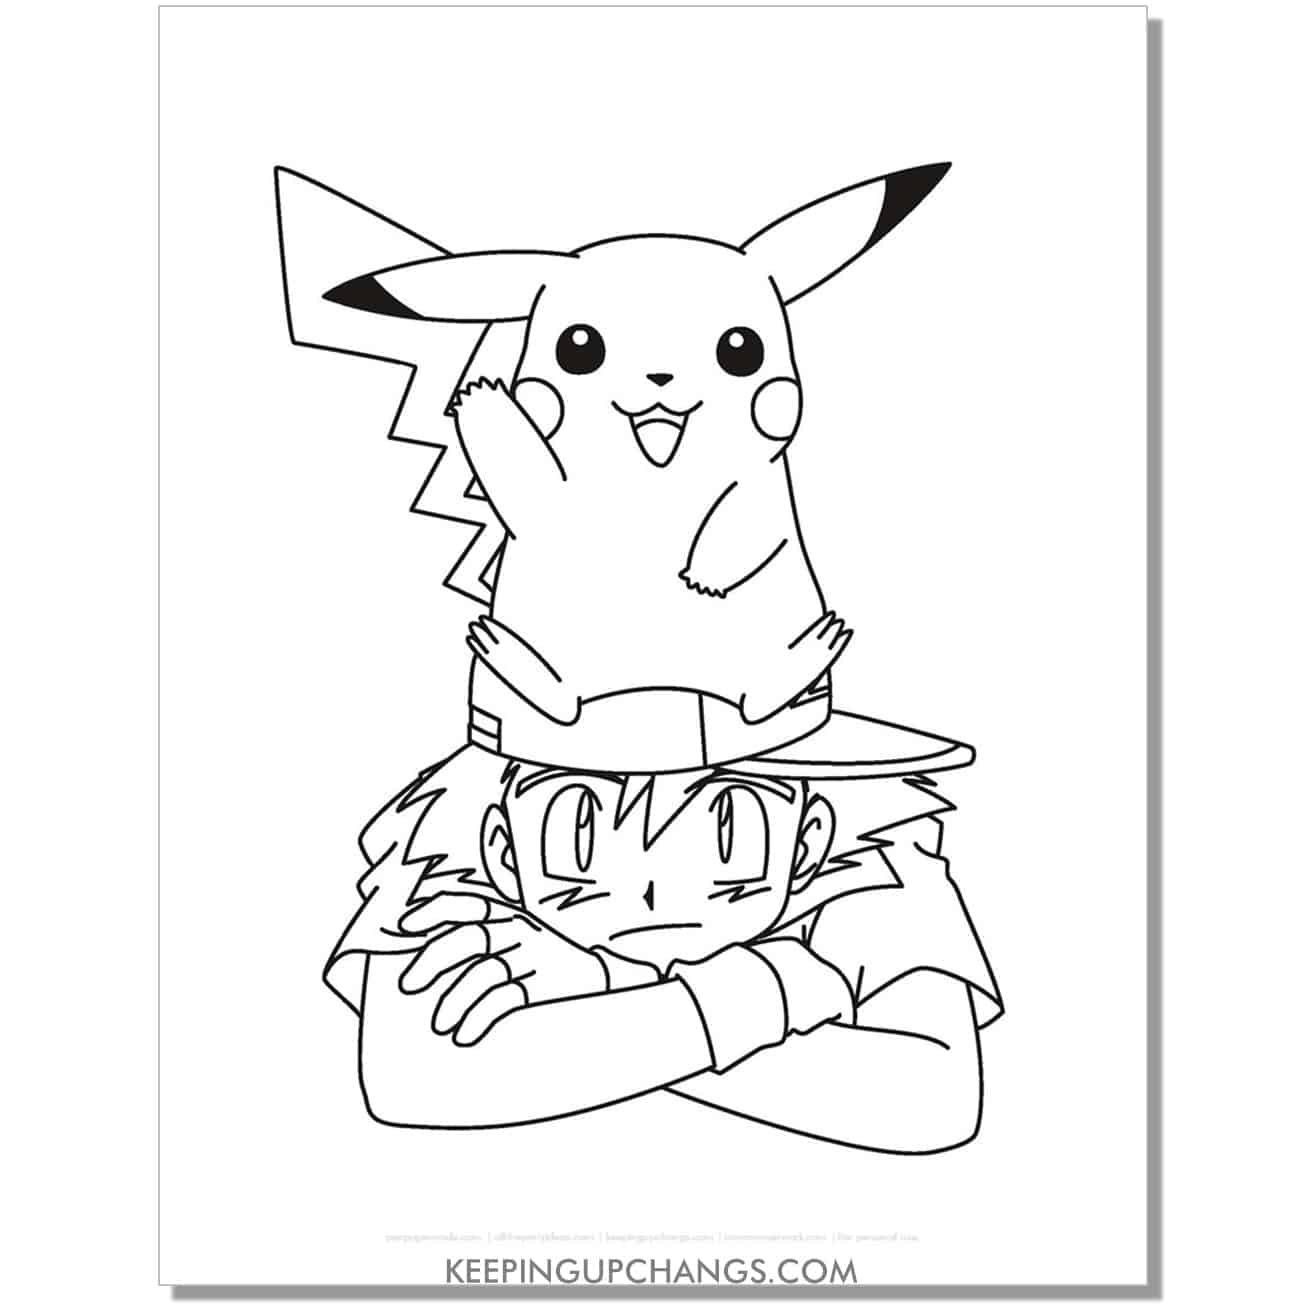 pikachu sitting on ash's head pokemon coloring page, sheet.